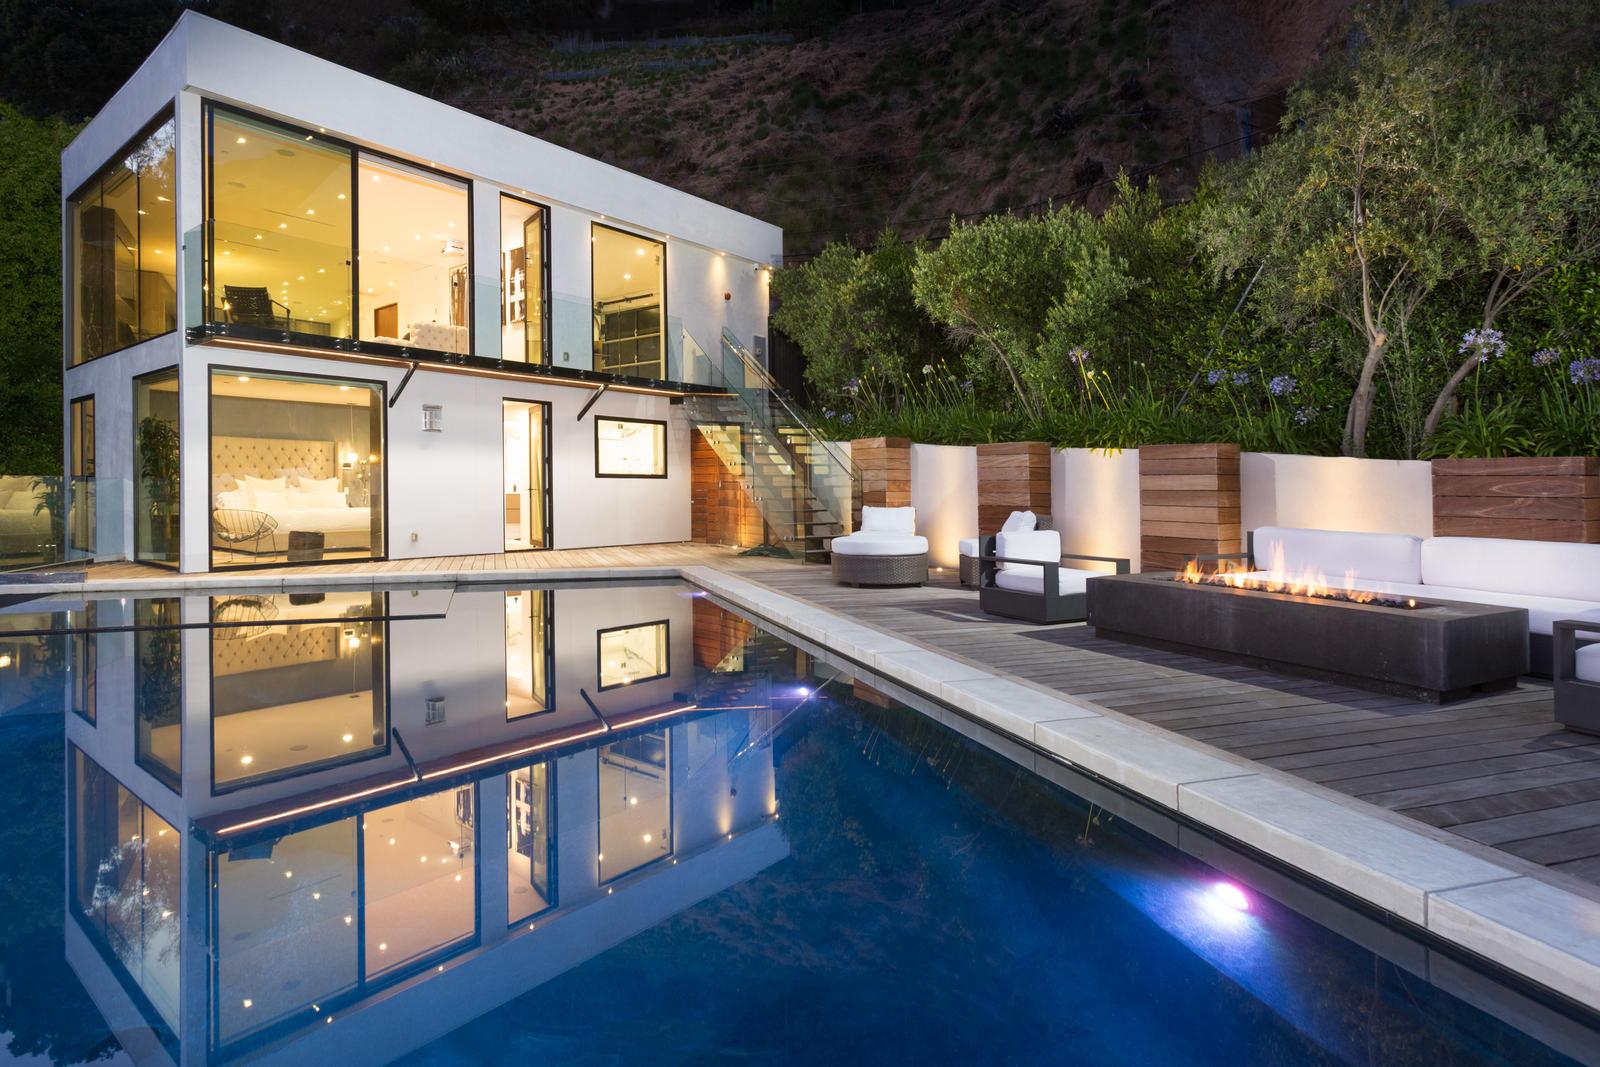 The Hollywood Villa